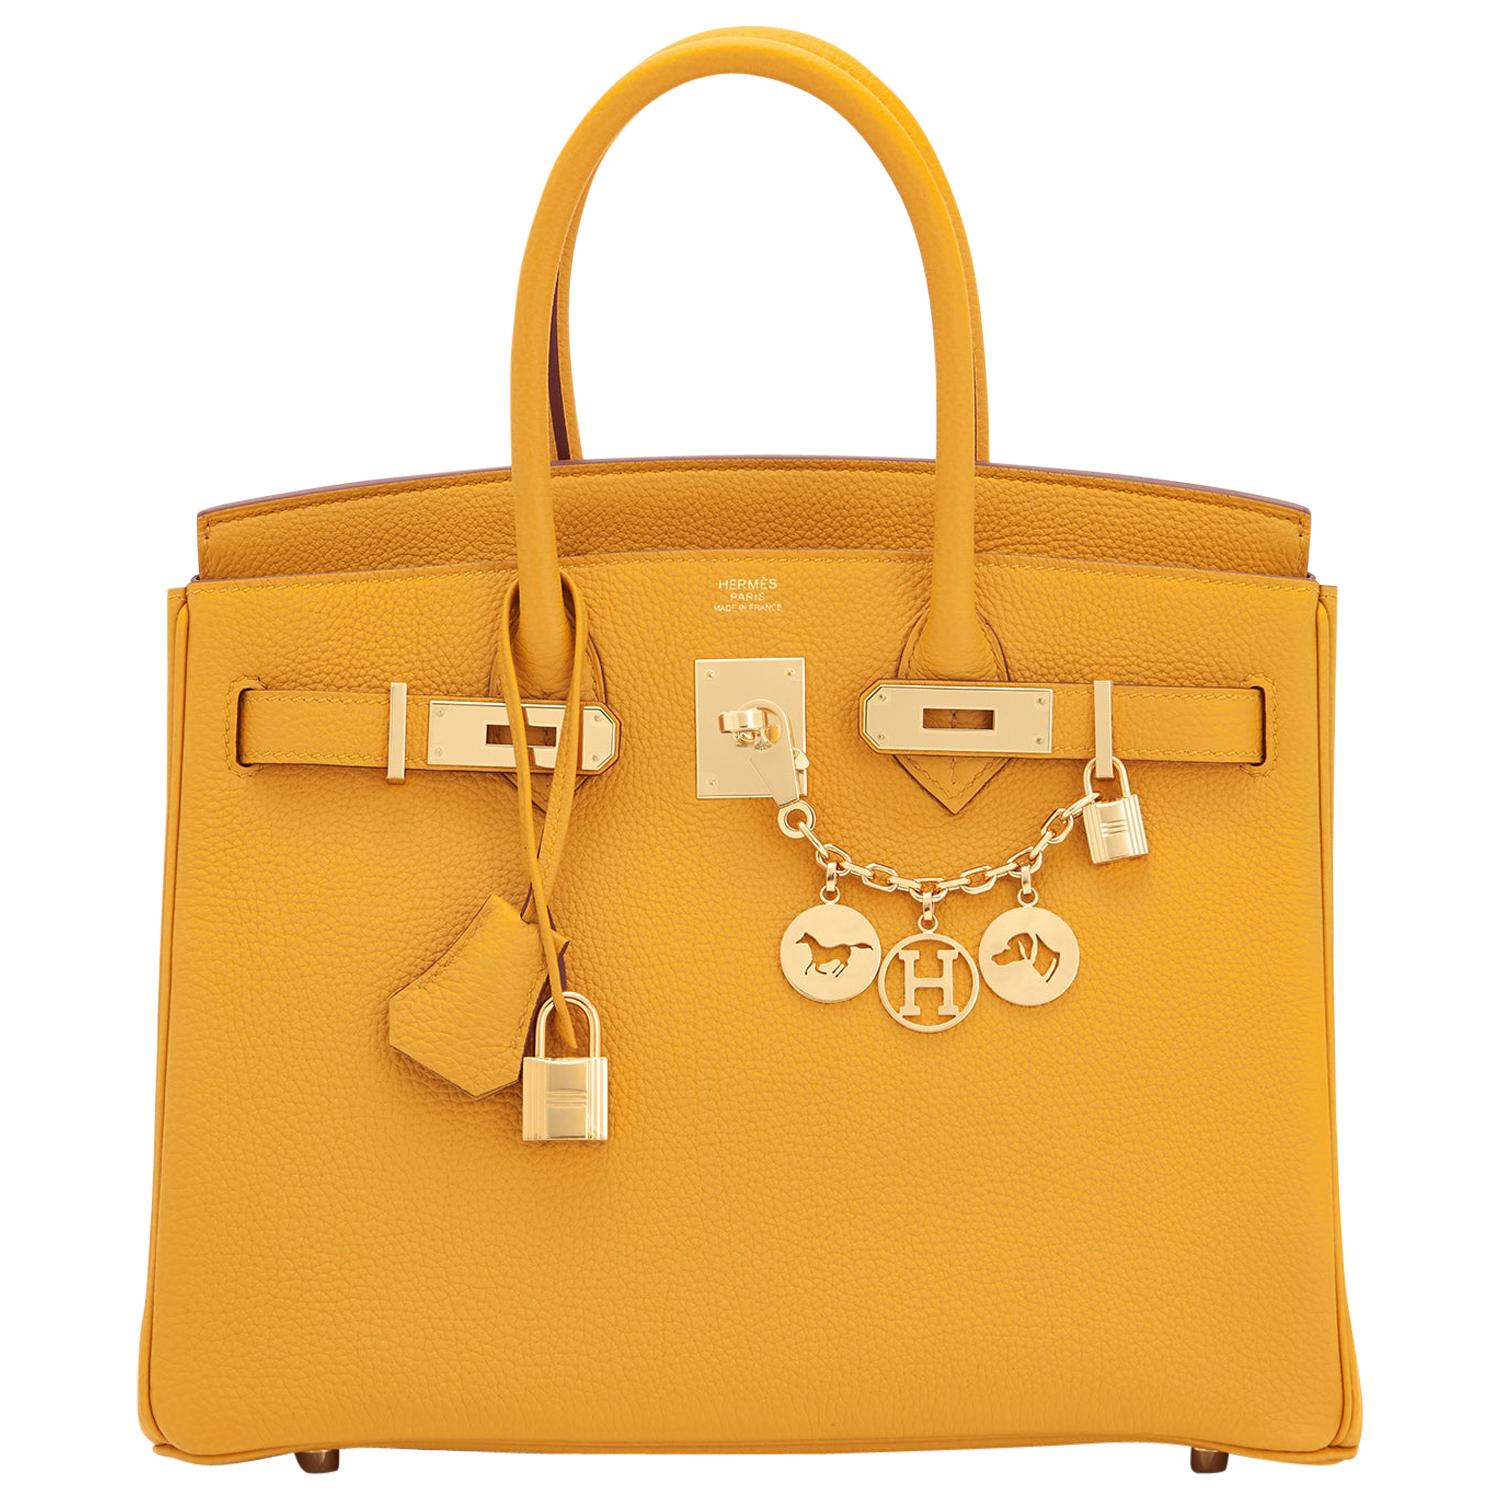 Hermes Birkin 30cm Jaune Ambre Bag Togo Amber Yellow Gold Hardware 